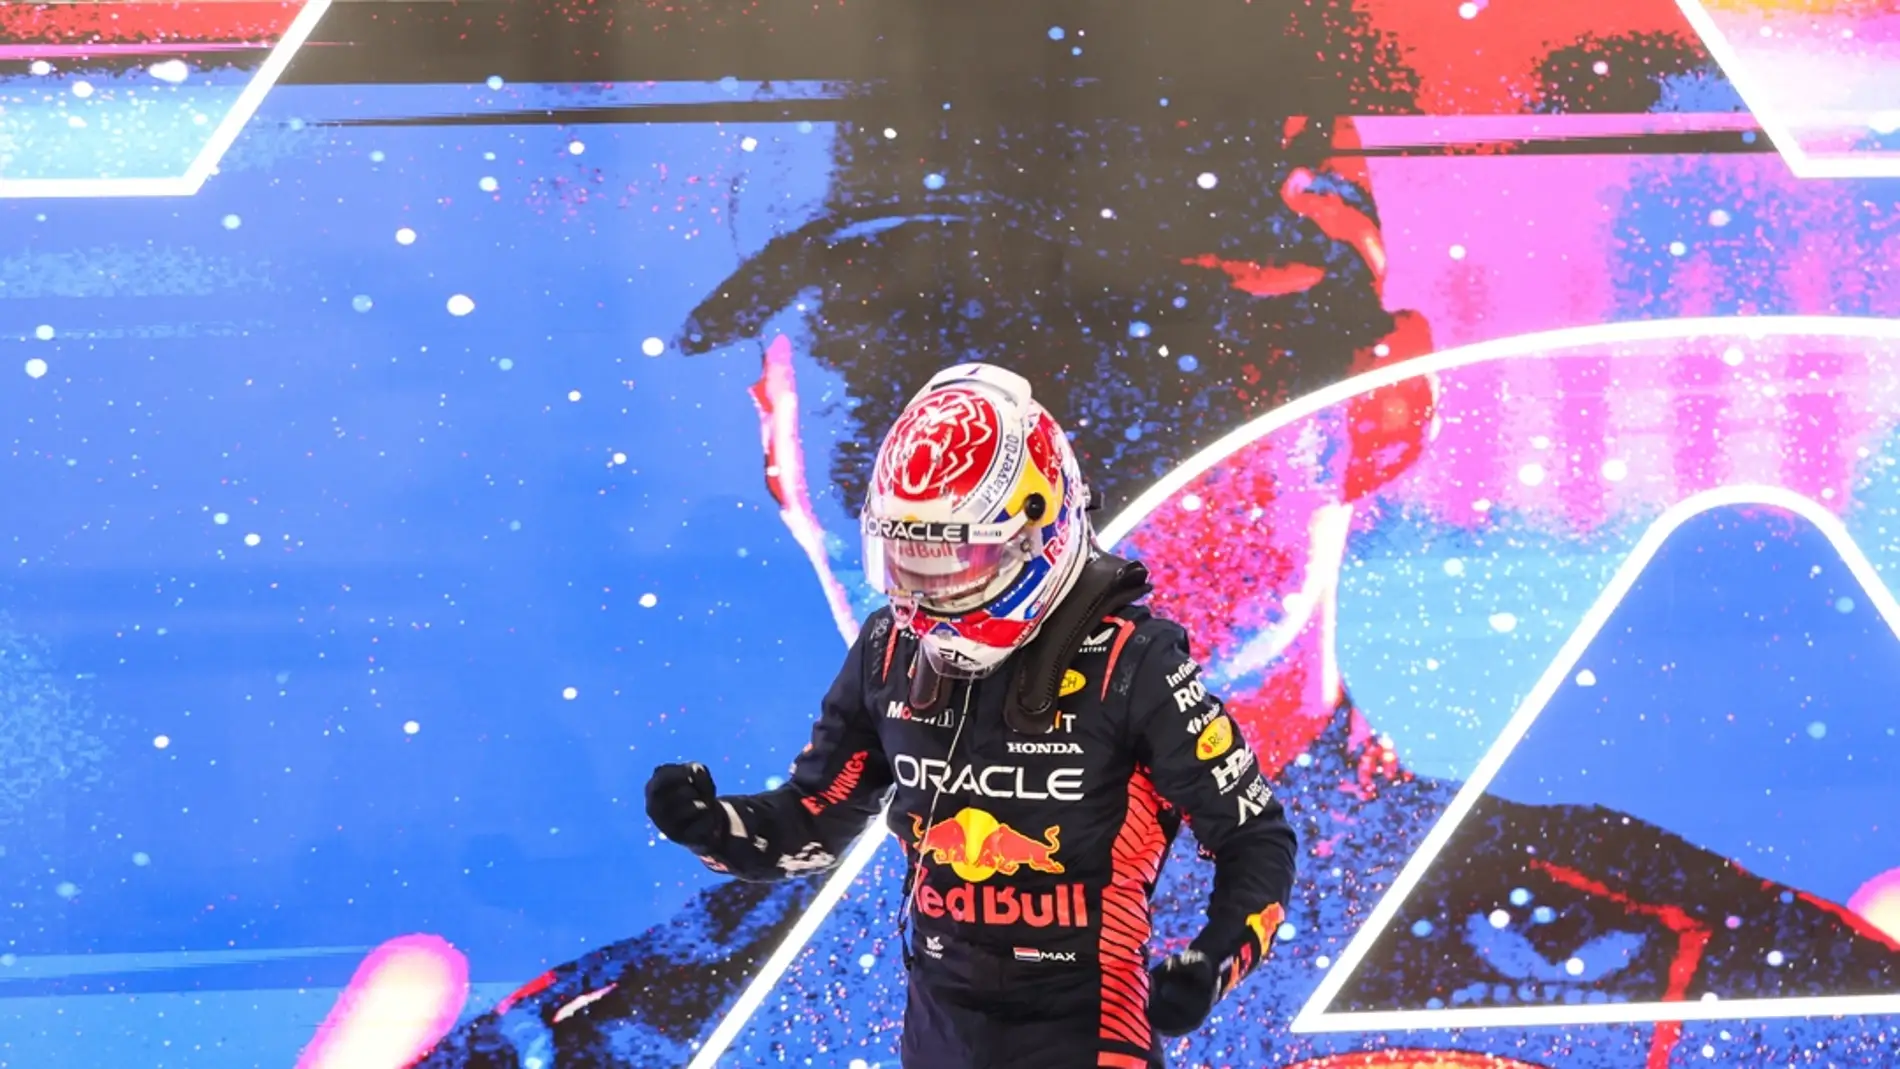 Verstappen, campeón del mundo por tercer año consecutivo